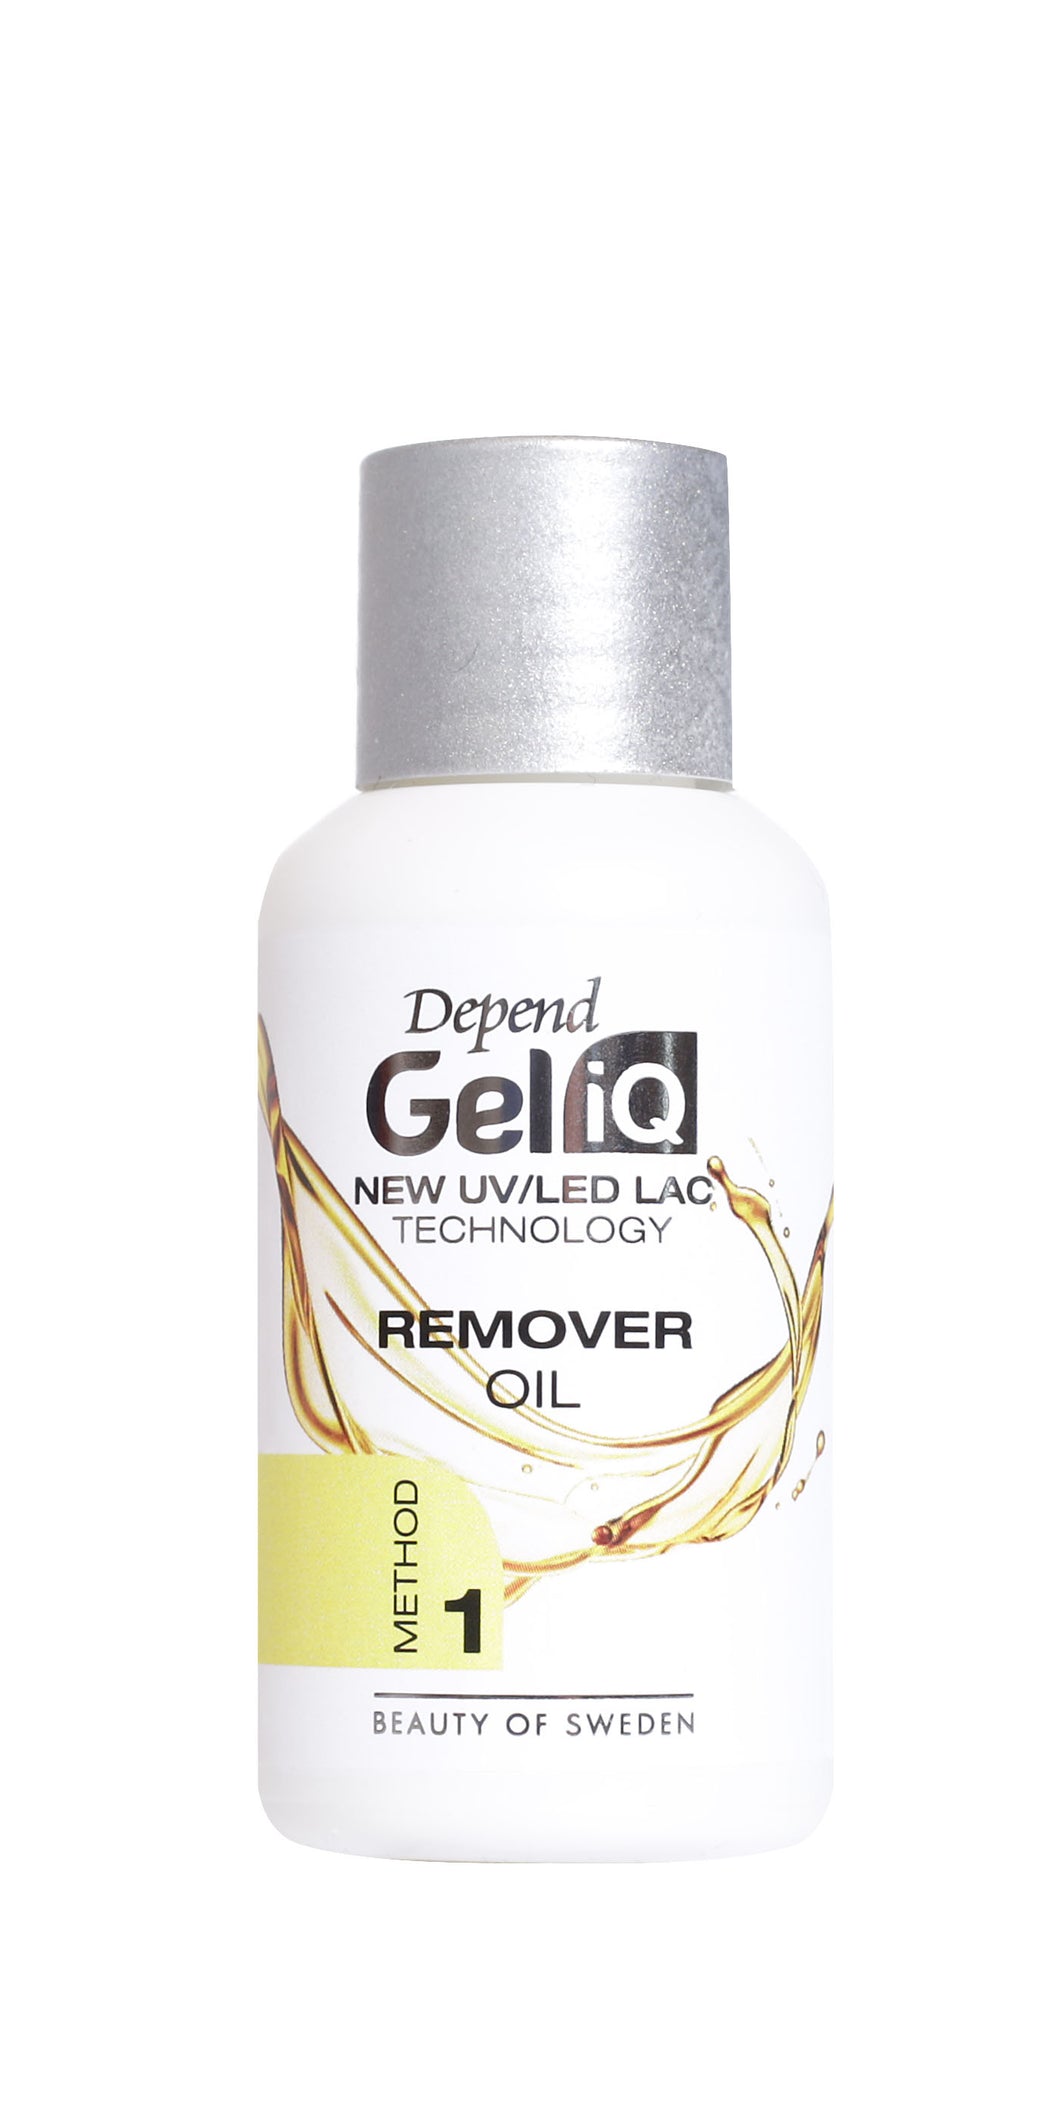 GeliQ Remover Oil method1 2903